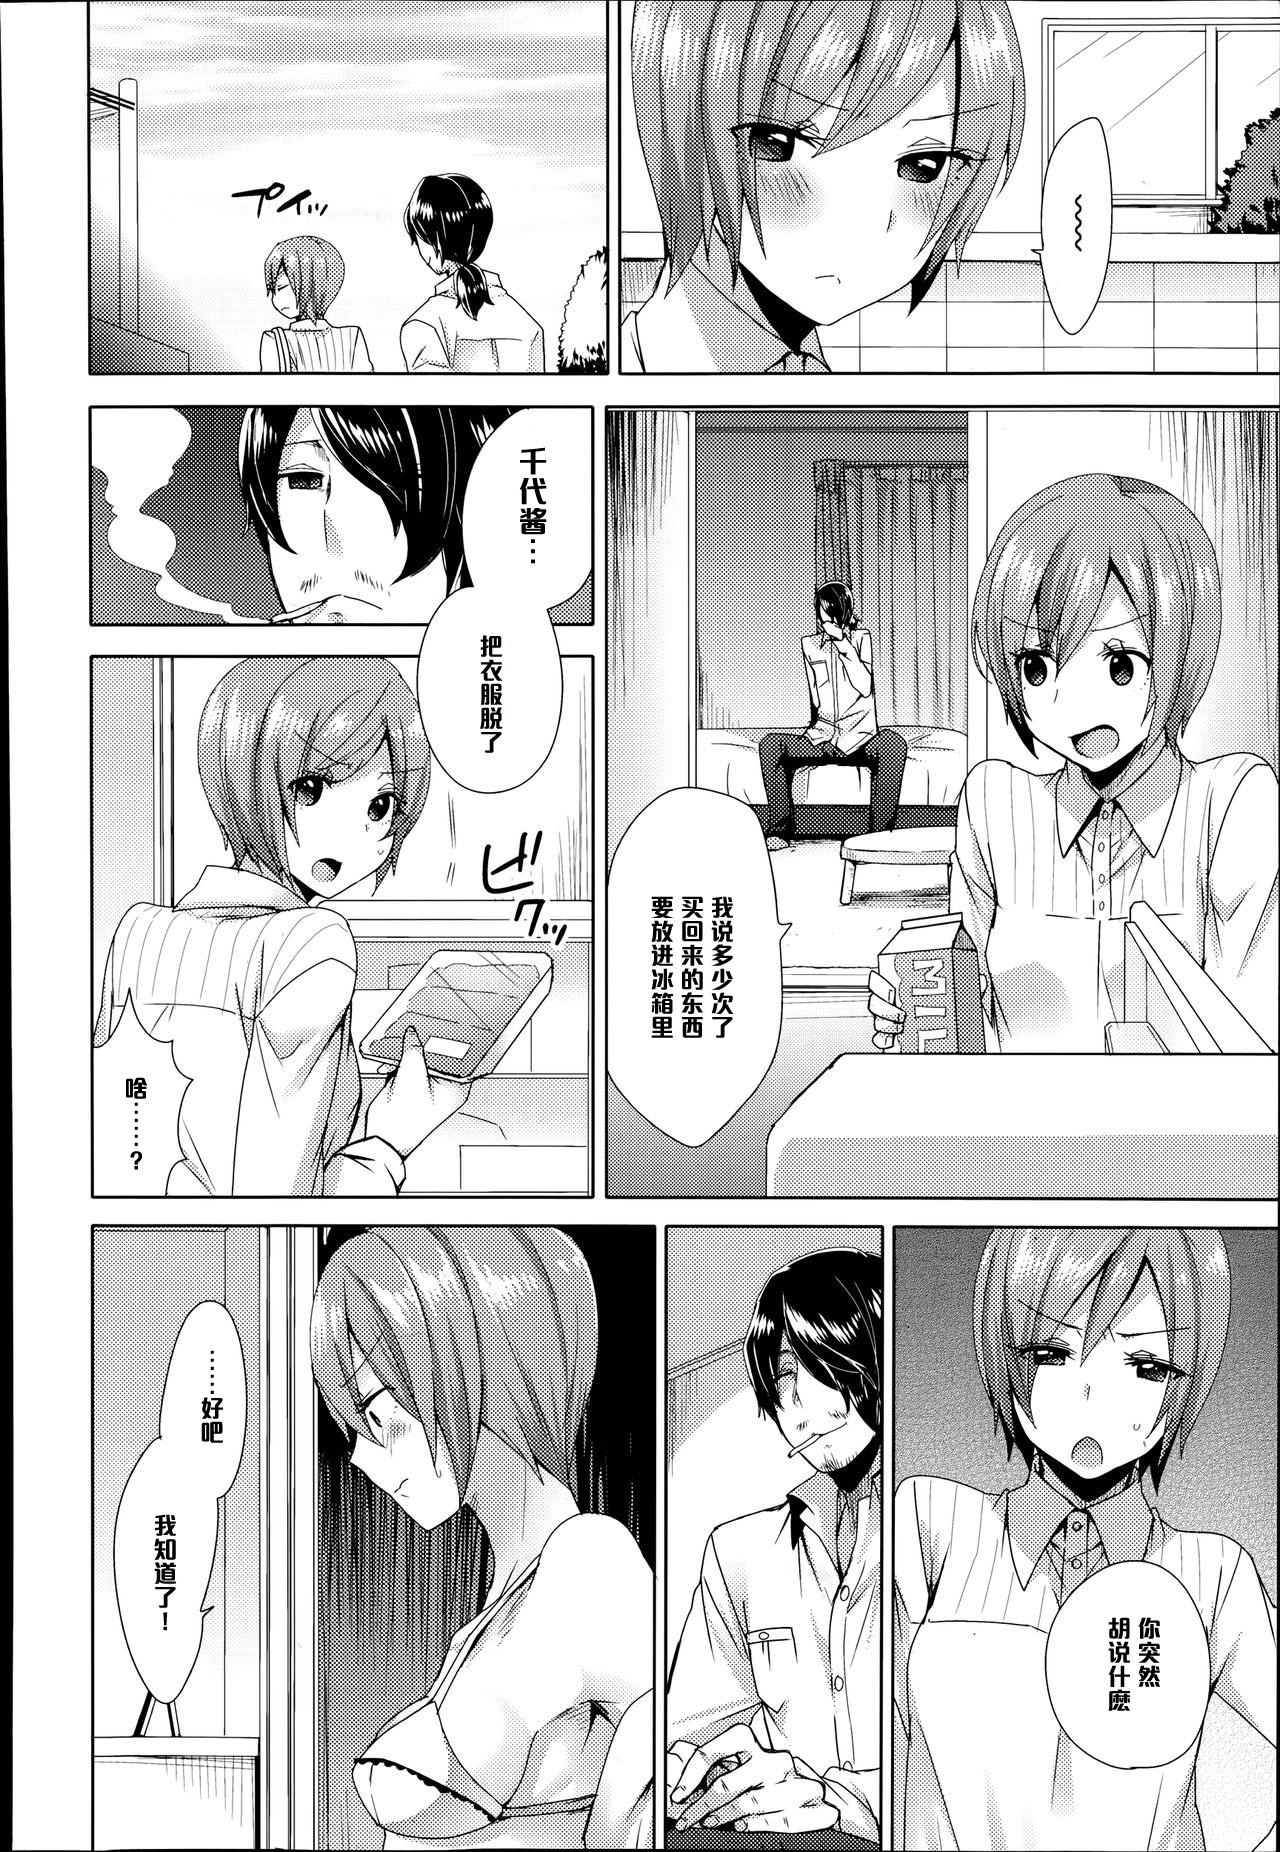 Female Himitsu no Sensei Stream - Page 4